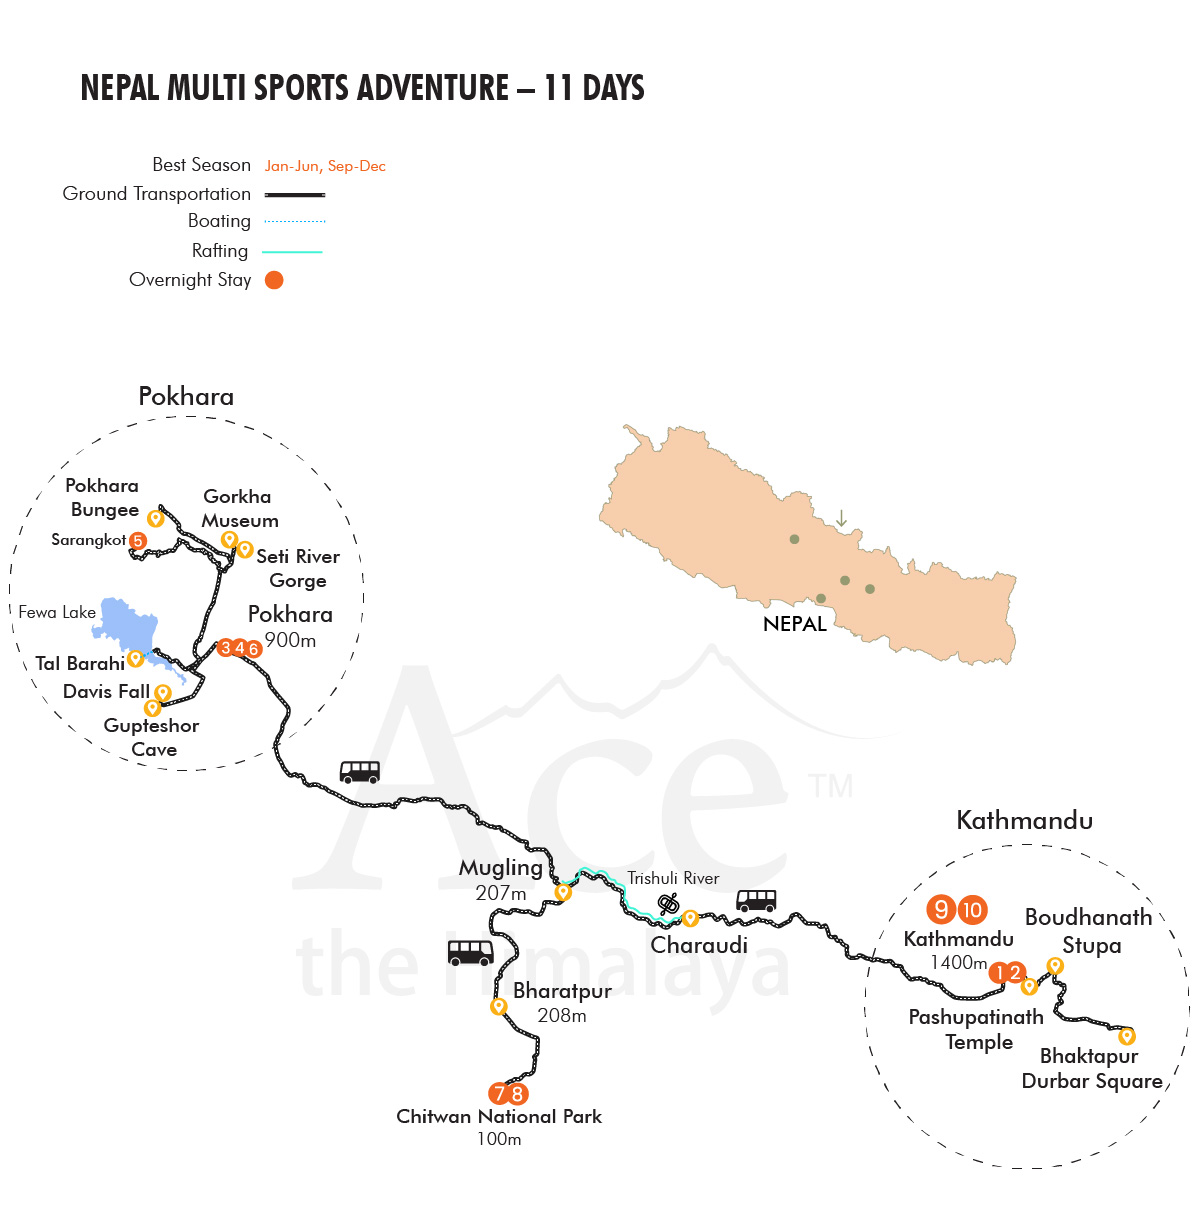 Nepal Multi Sports Adventure map